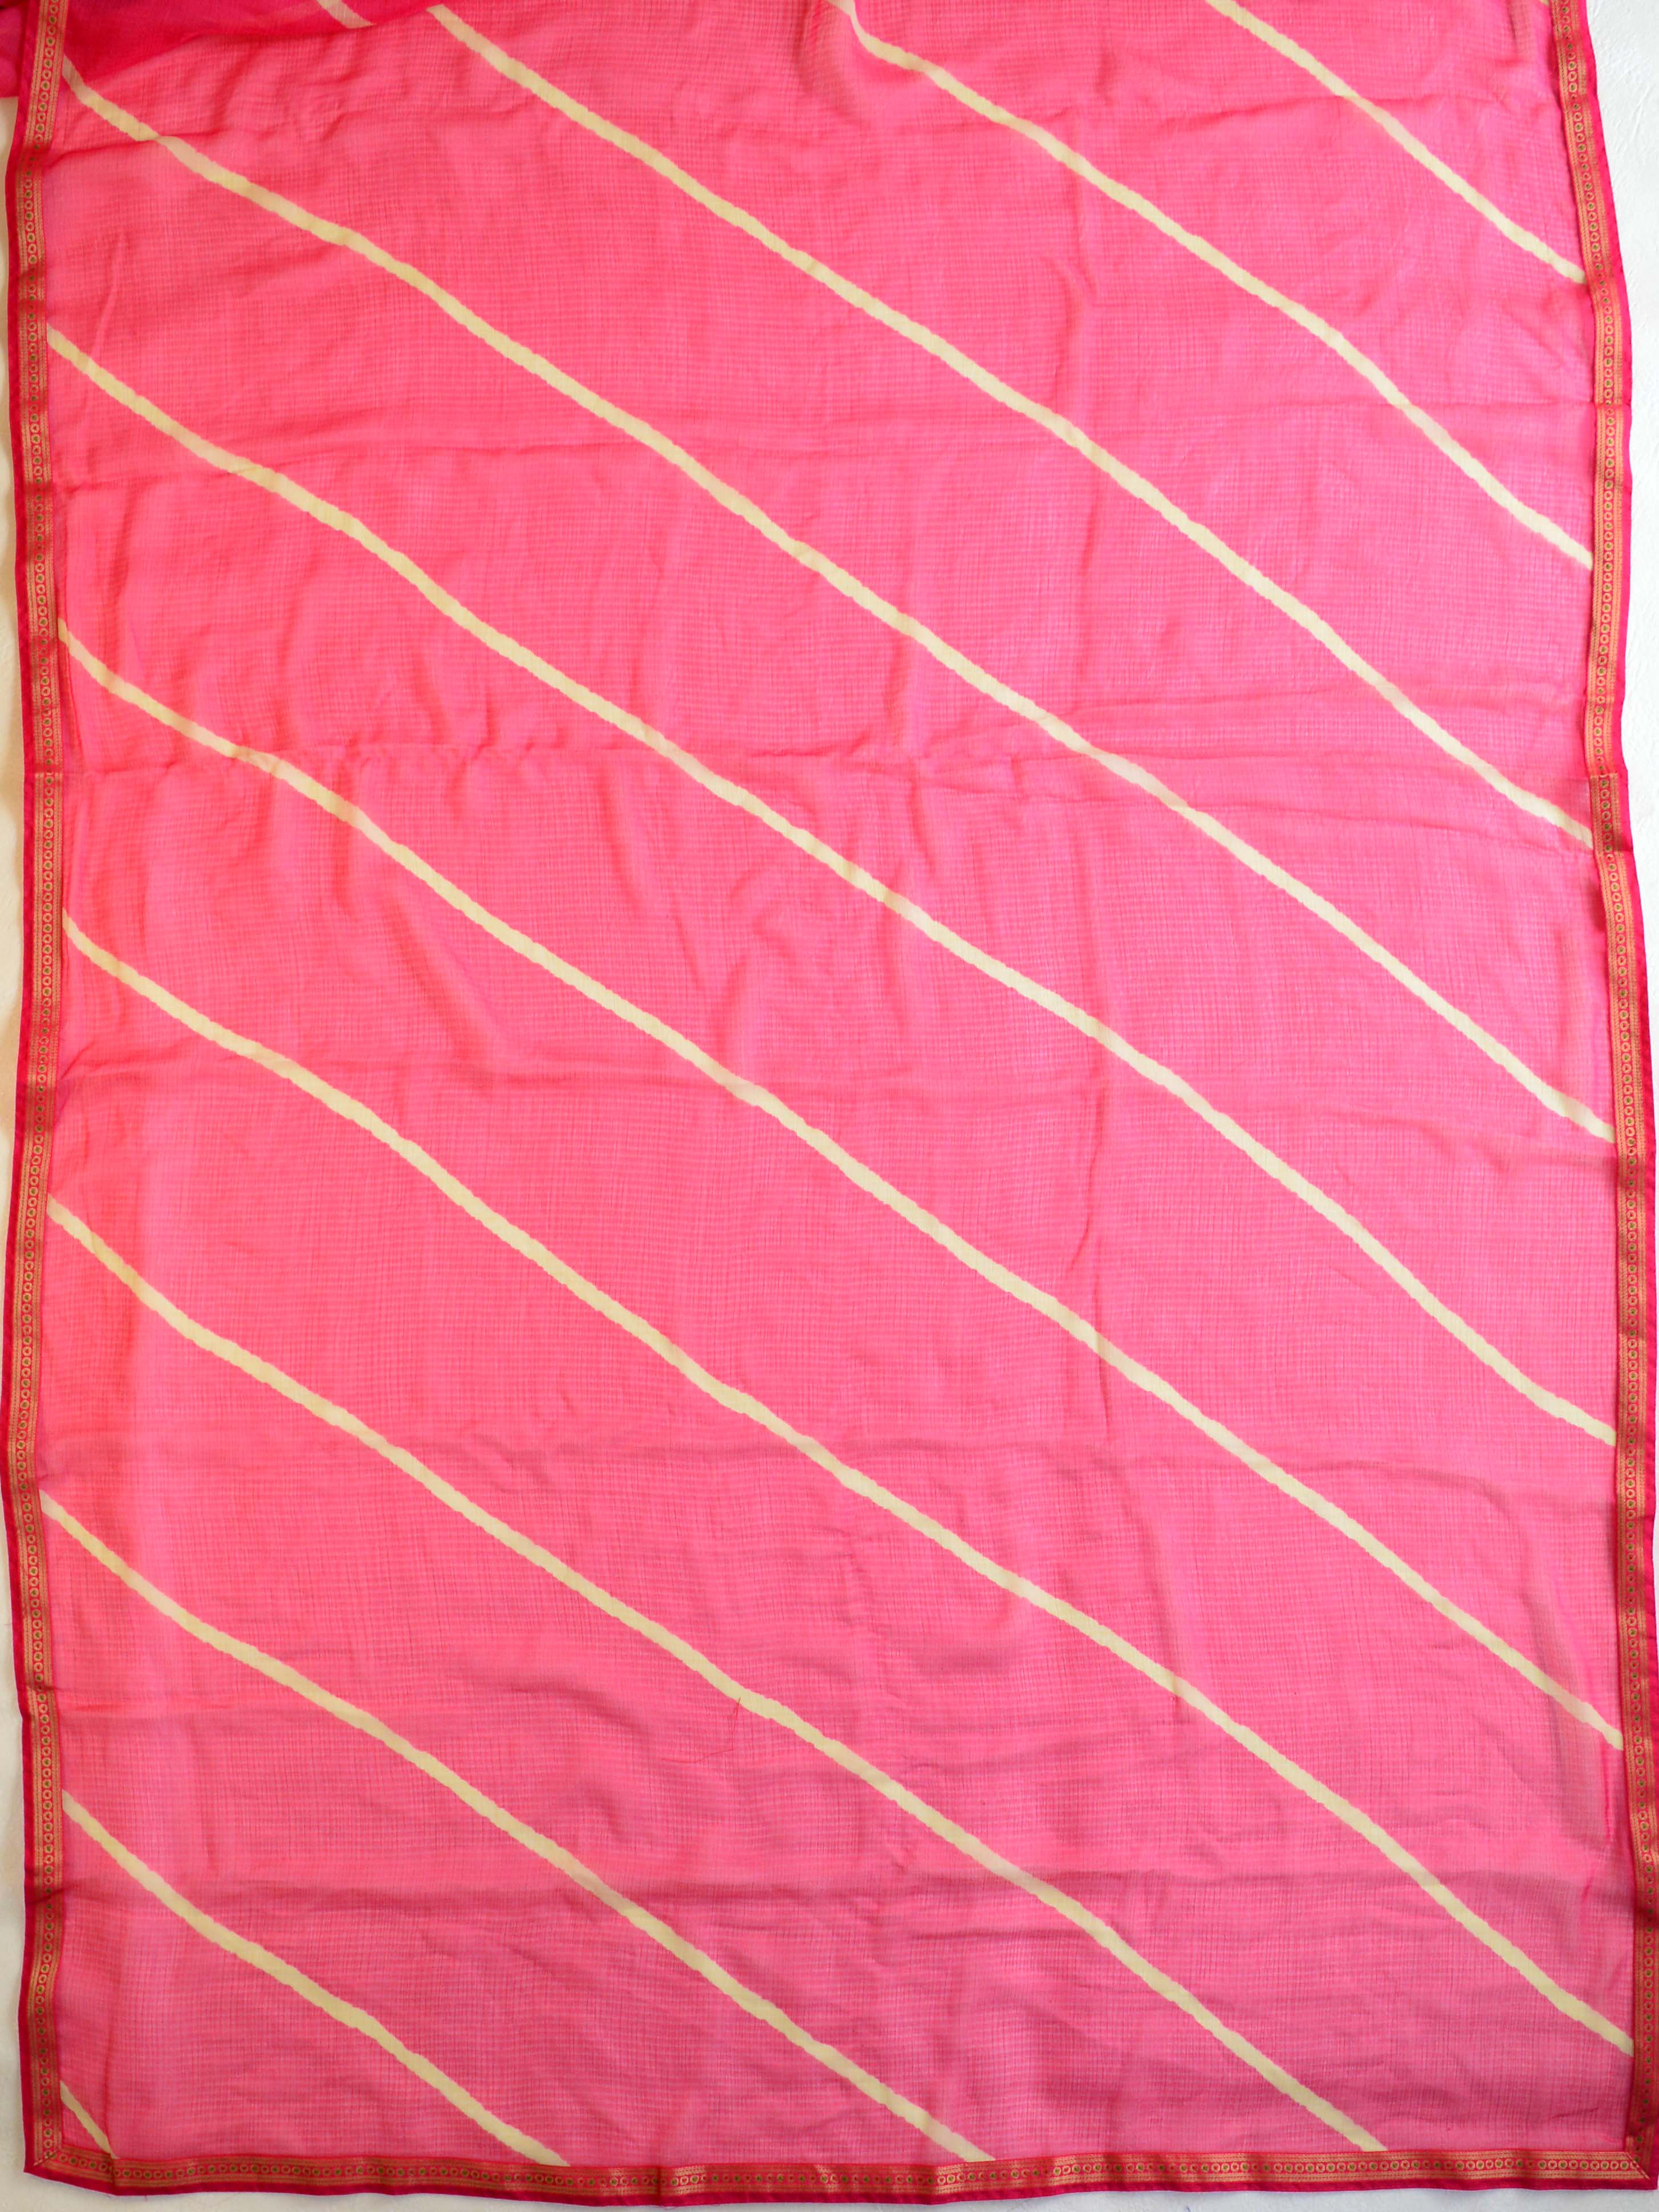 Banarasee Chiffon Blend Saree With Leheriya Work Zari Border & Brocade Blouse-Pink